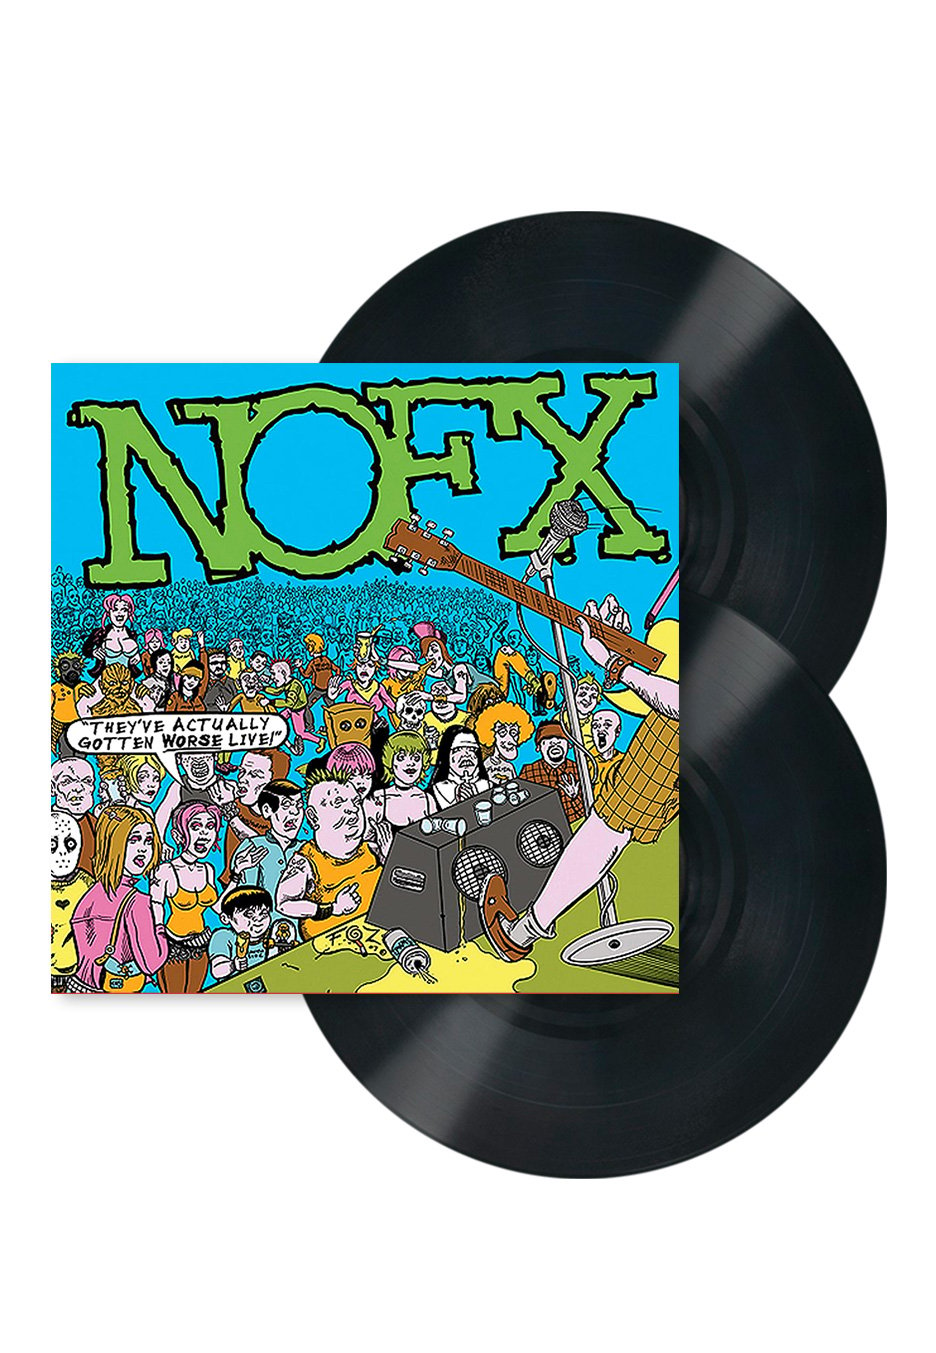 NOFX - They've Actually Gotten Worse Live - 2 Vinyl